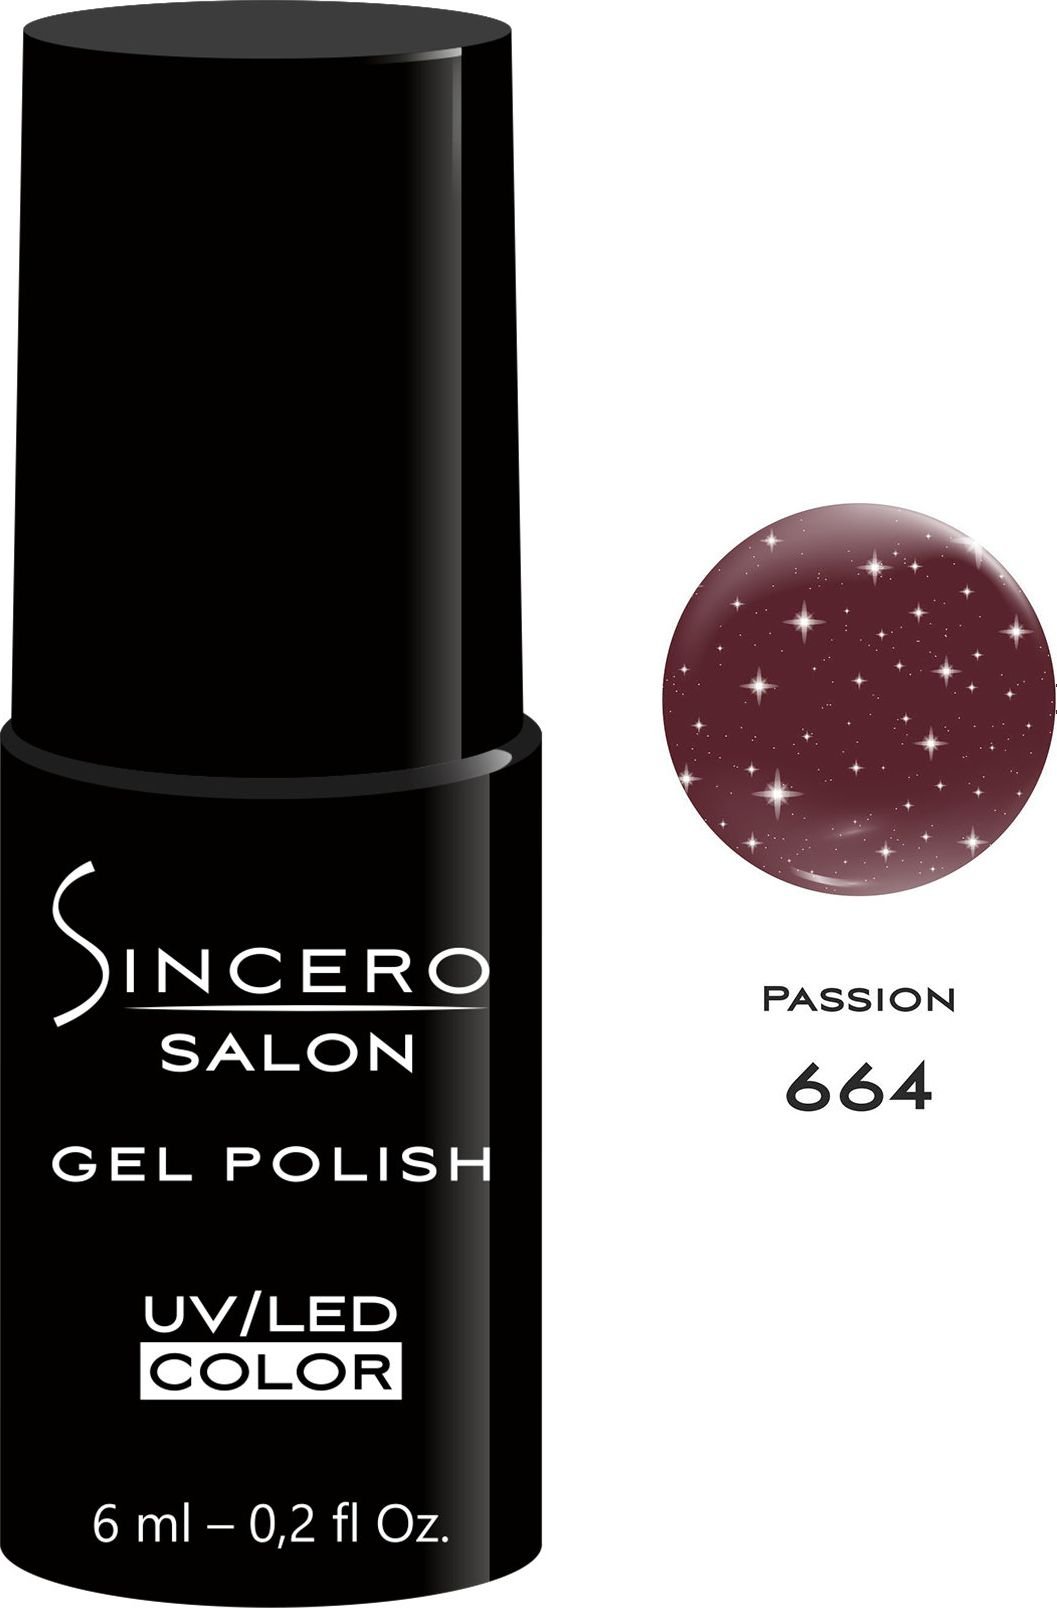 Sincero Salon Gel Polish UV/LED 664 Passion 6ml